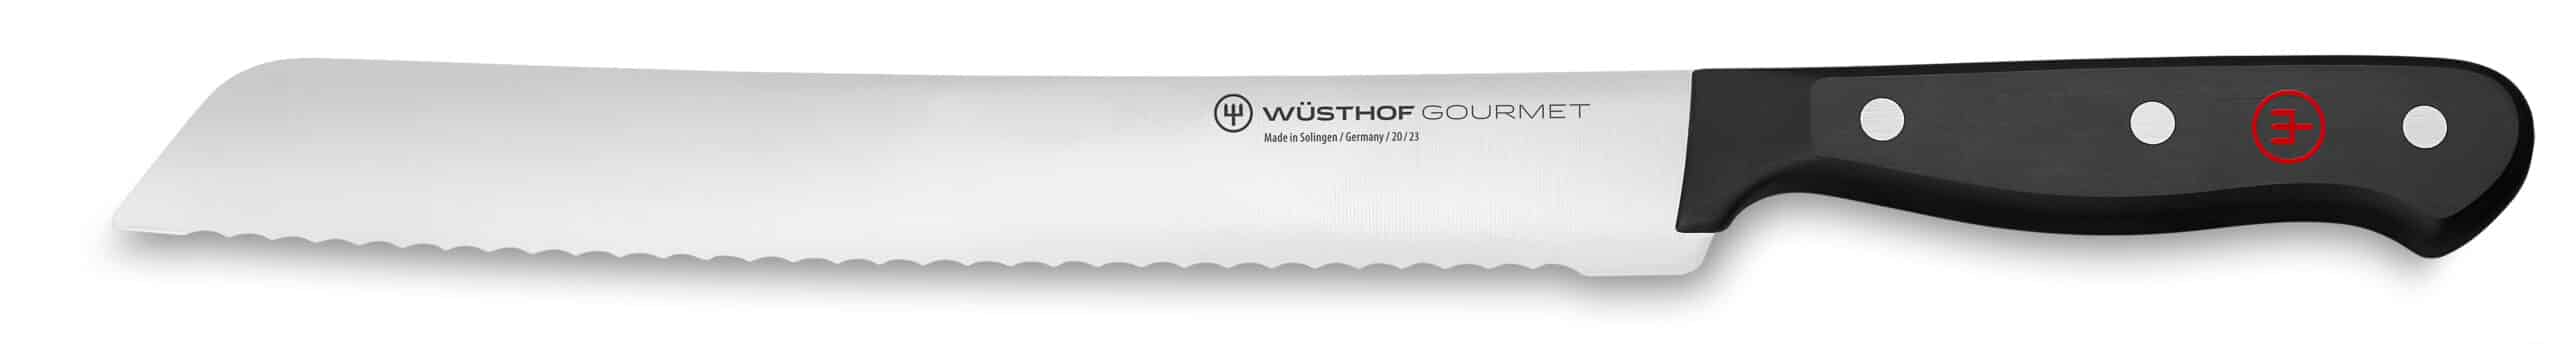 Wusthof Gourmet Bread Knife 23cm